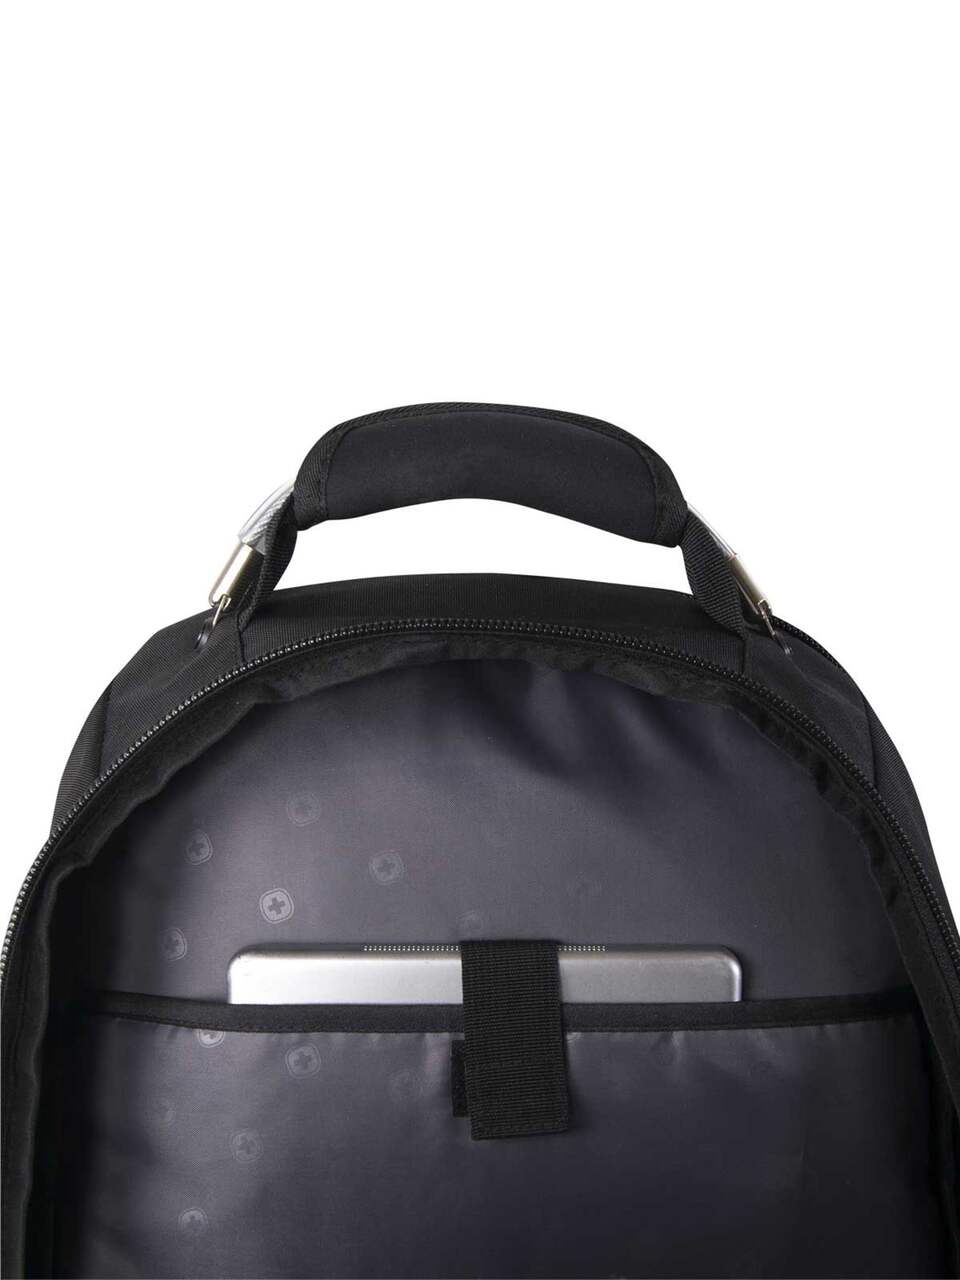 Swiss Gear Executive Laptop Backpack w/ RFID Blocking Pocket For  Work/Travel/School, 32-L